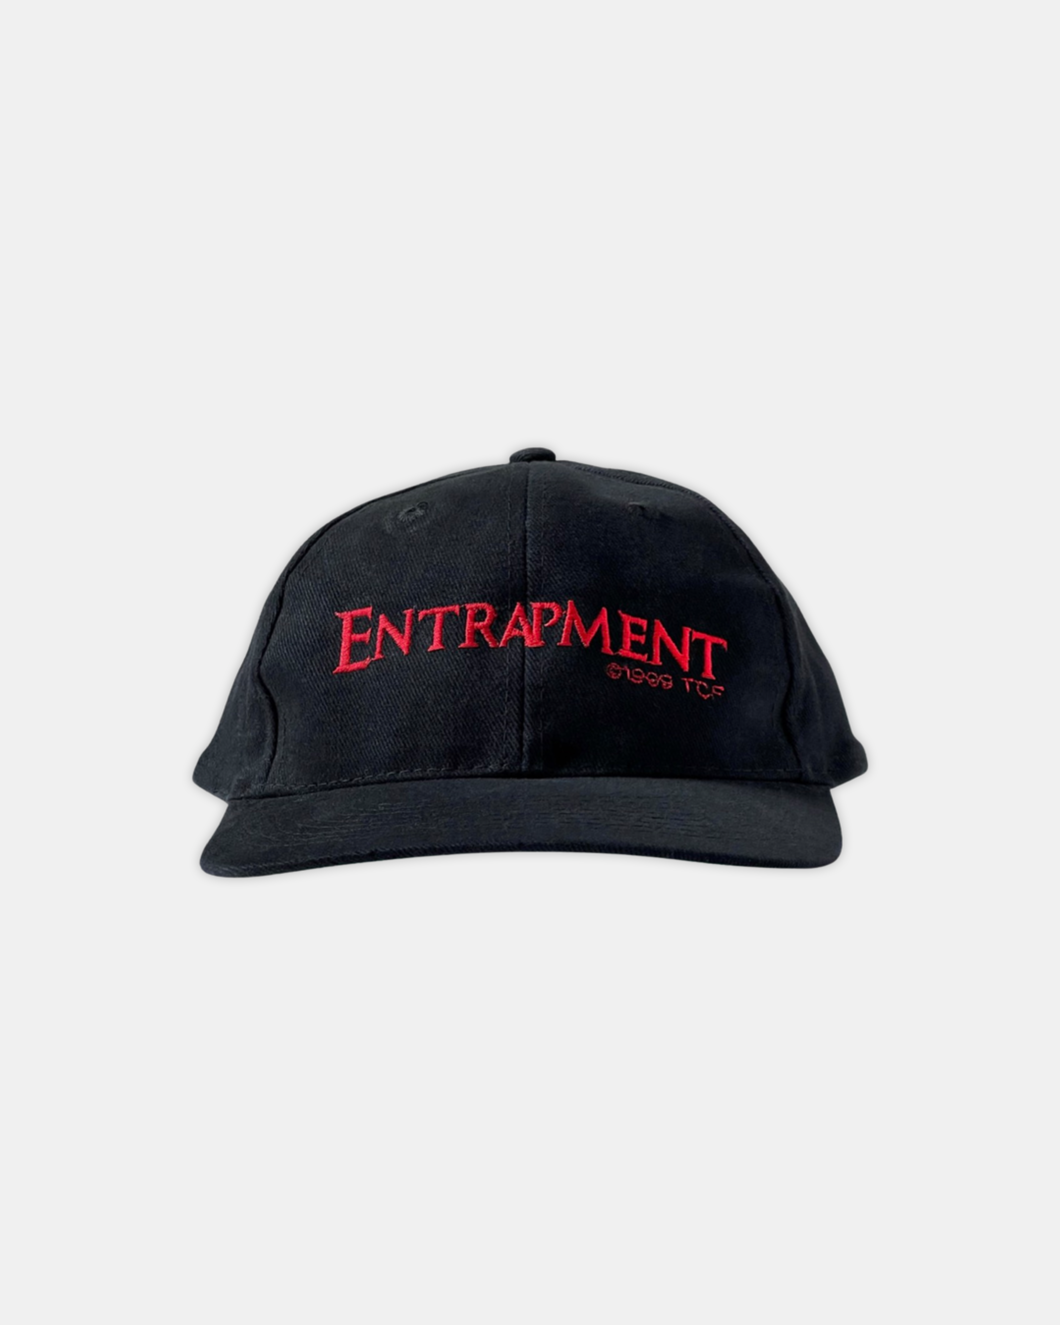 Vintage 1999 Entrapment Movie Snapback Hat